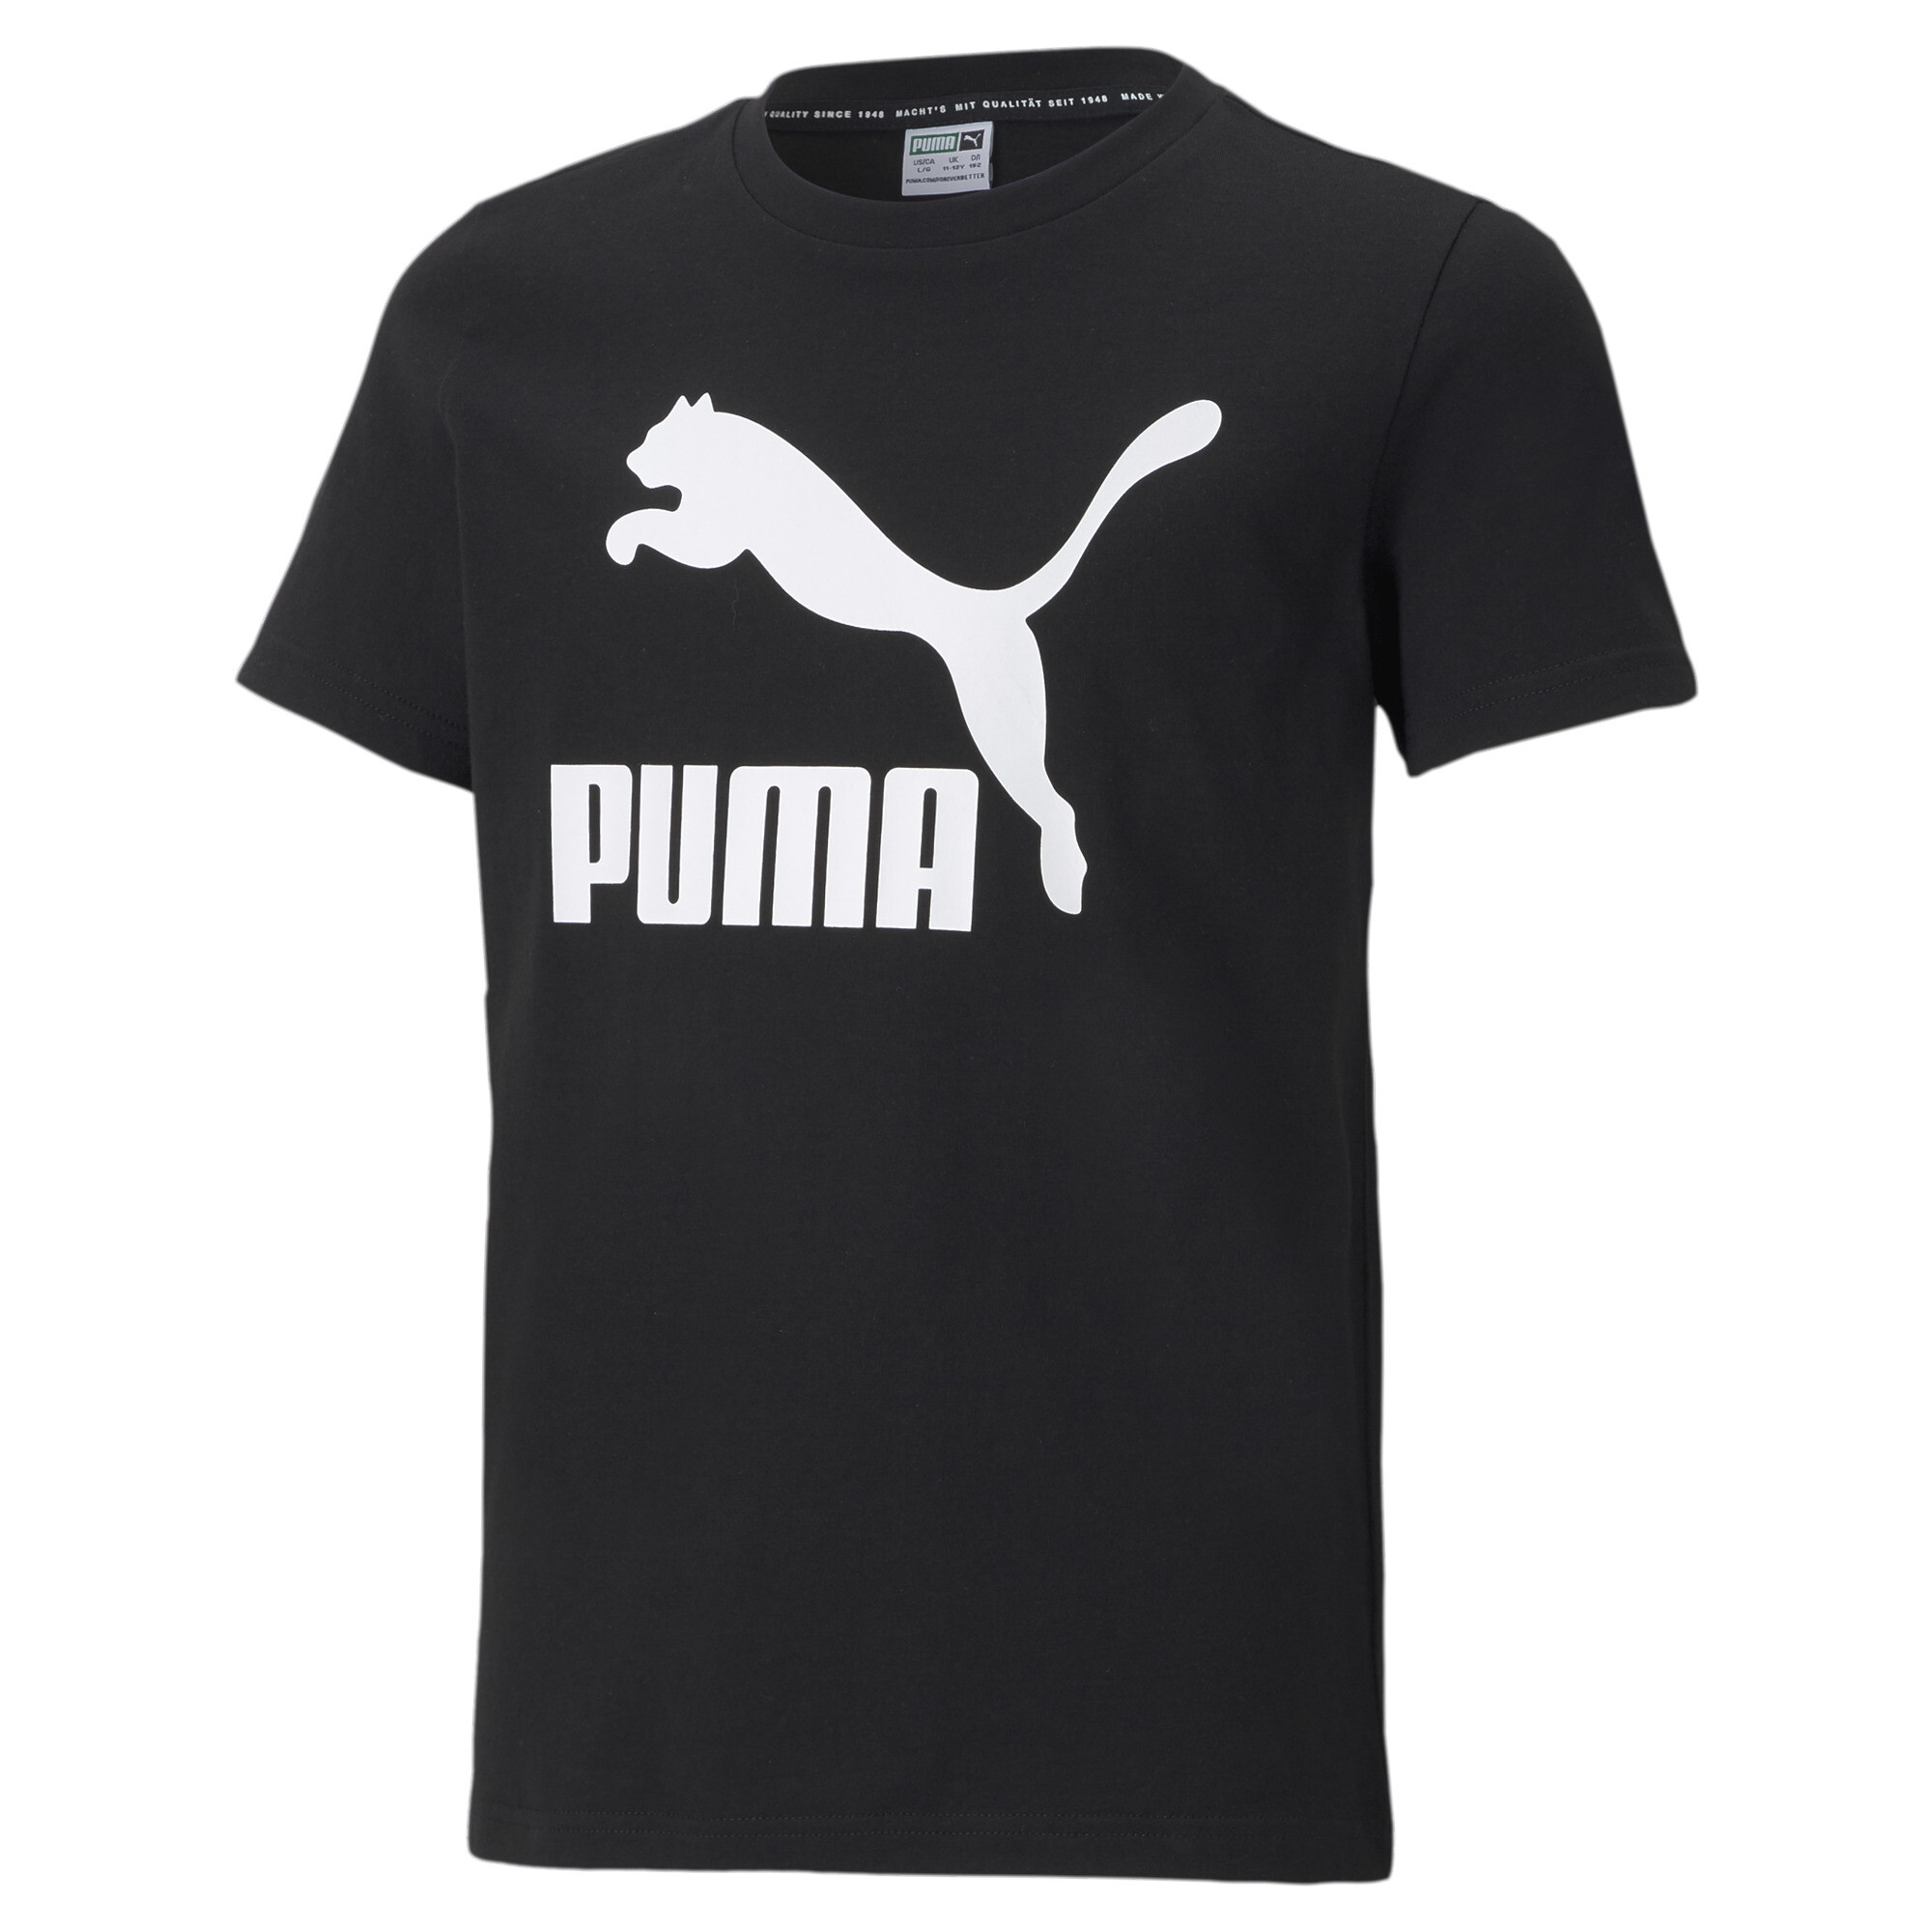 PUMA Classics B T-Shirt In Black, Size 4-5 Youth